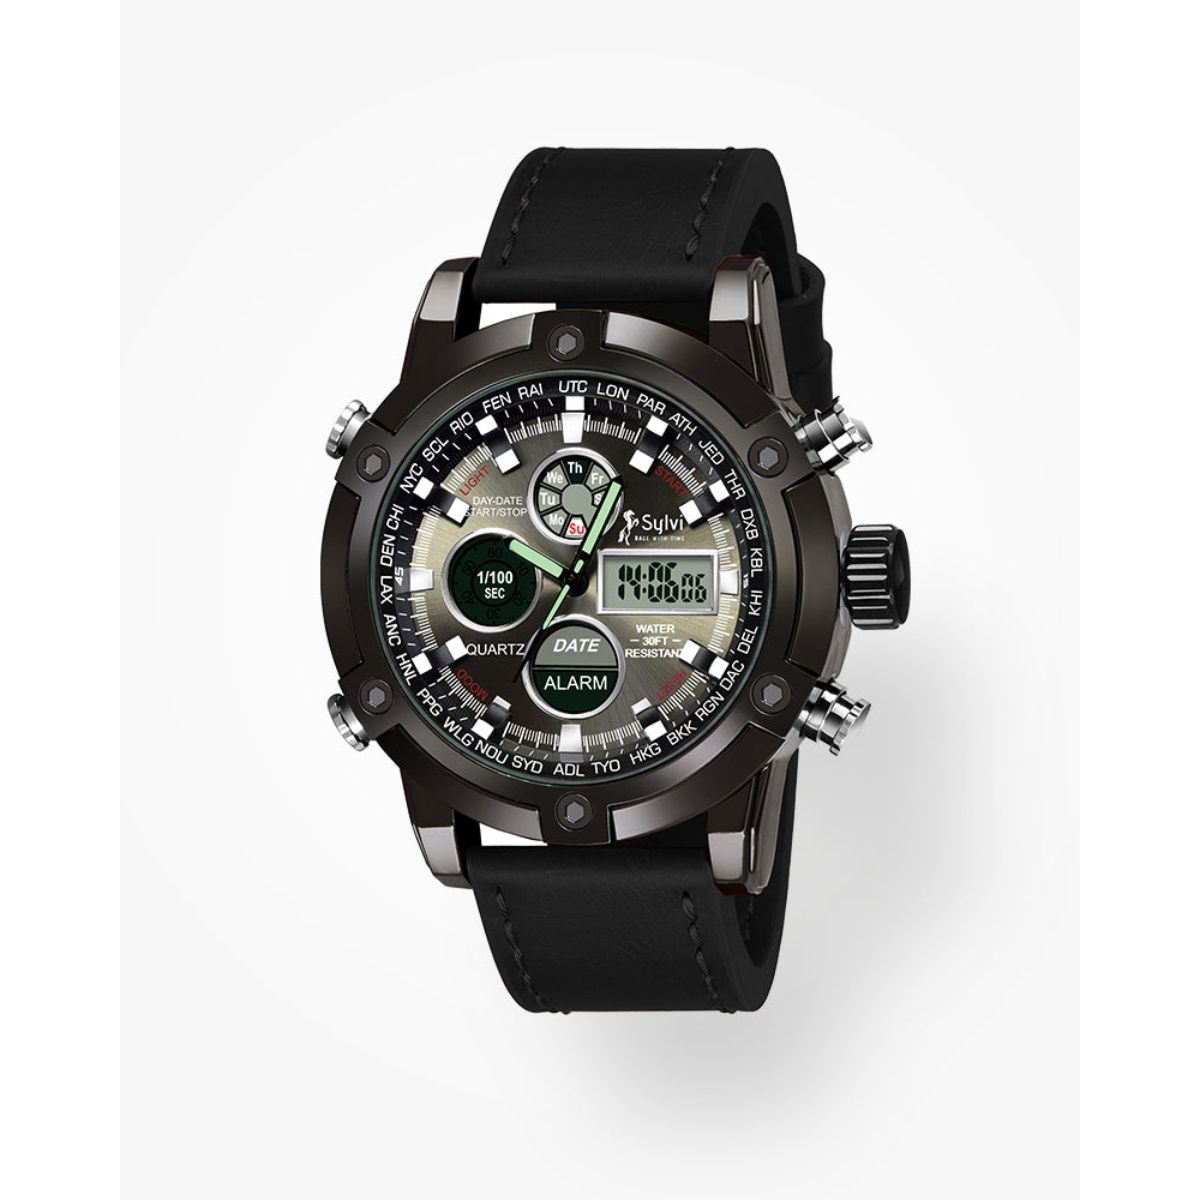 SYLVI World Time Fully Multi-functional Analog Digital Watch For Men | Best  watches for men, Buy watches online, Watches for men